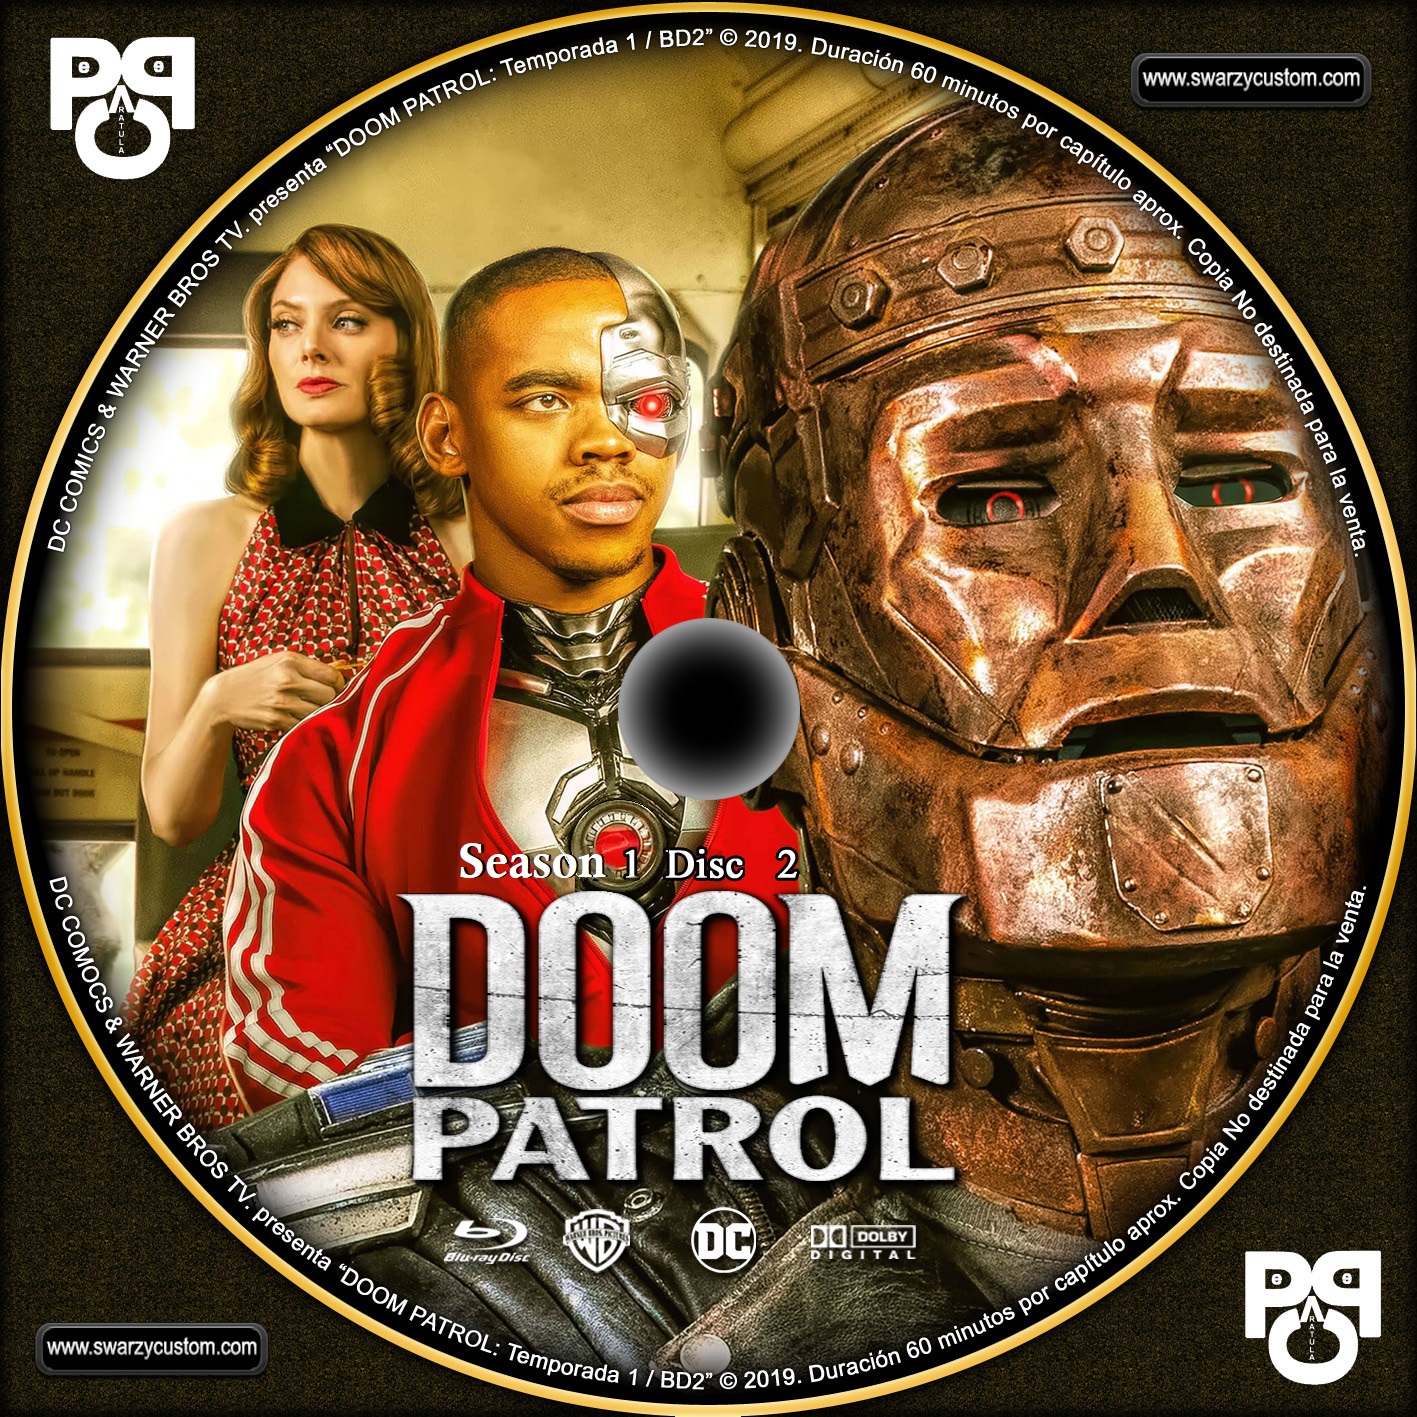 Doom Patrol saison 1 DISC 2 custom (BLU-RAY)